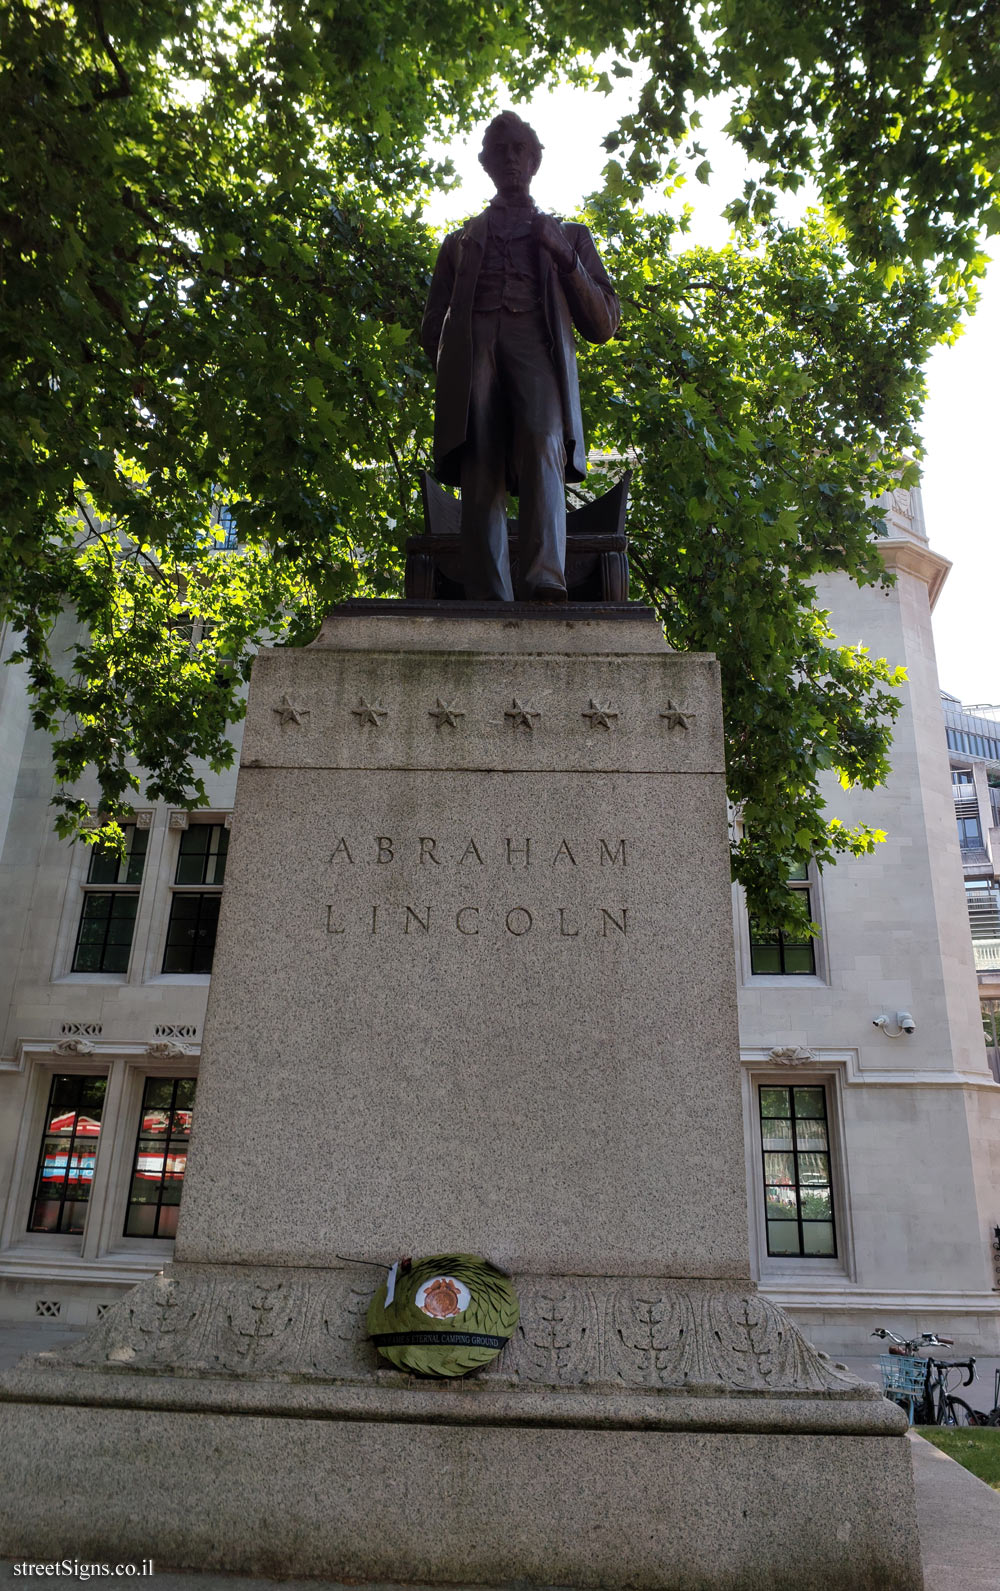 London - Abraham Lincoln’s statue - Parliament Square, SW1, London, UK